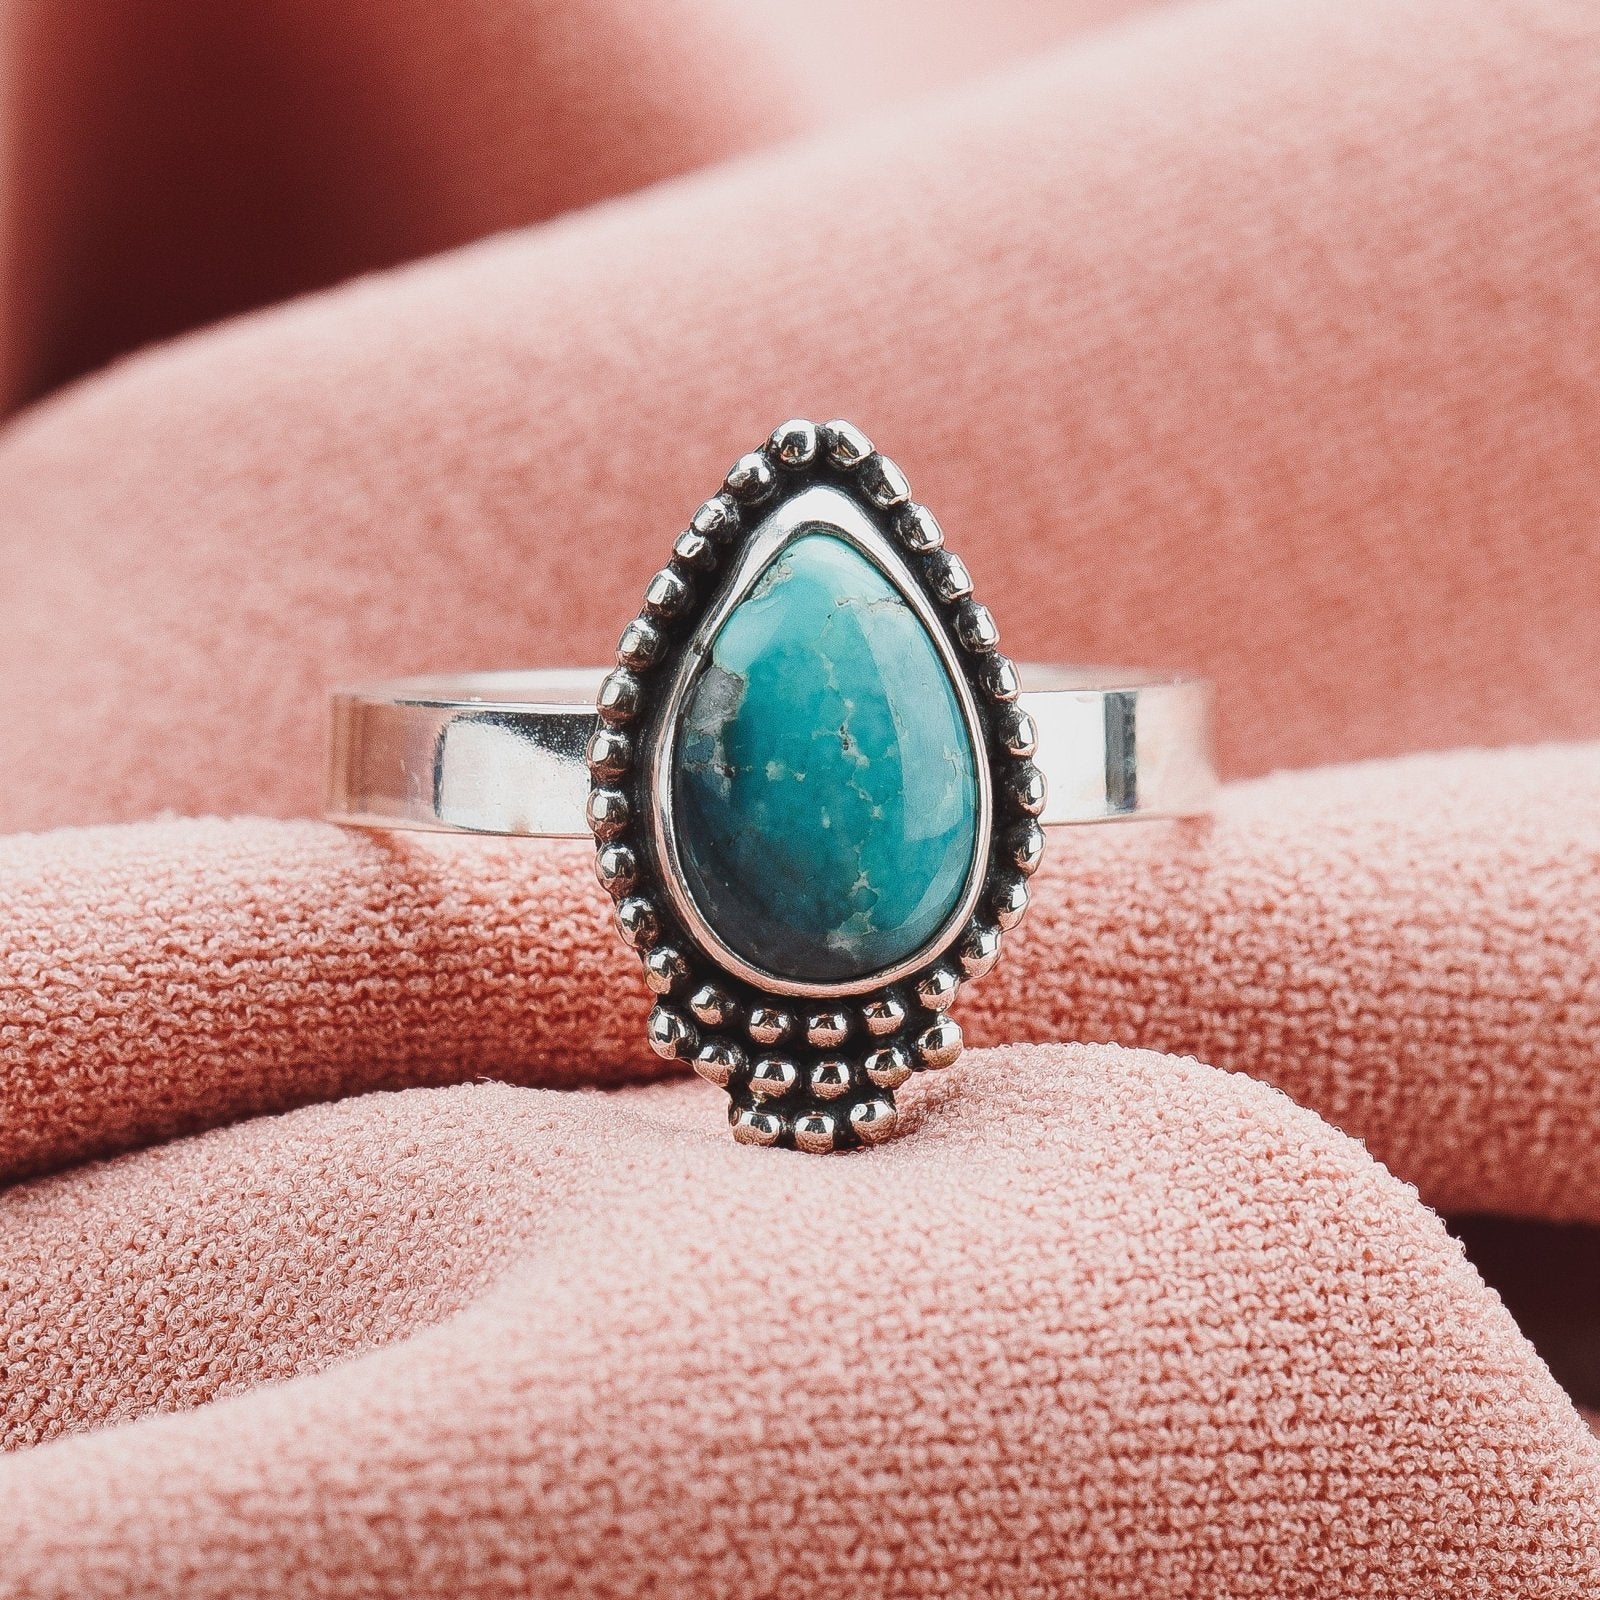 Size 7.5 White Water Turquoise Gemstone Ring - Melanie Golden Jewelry - gemstone rings, rings